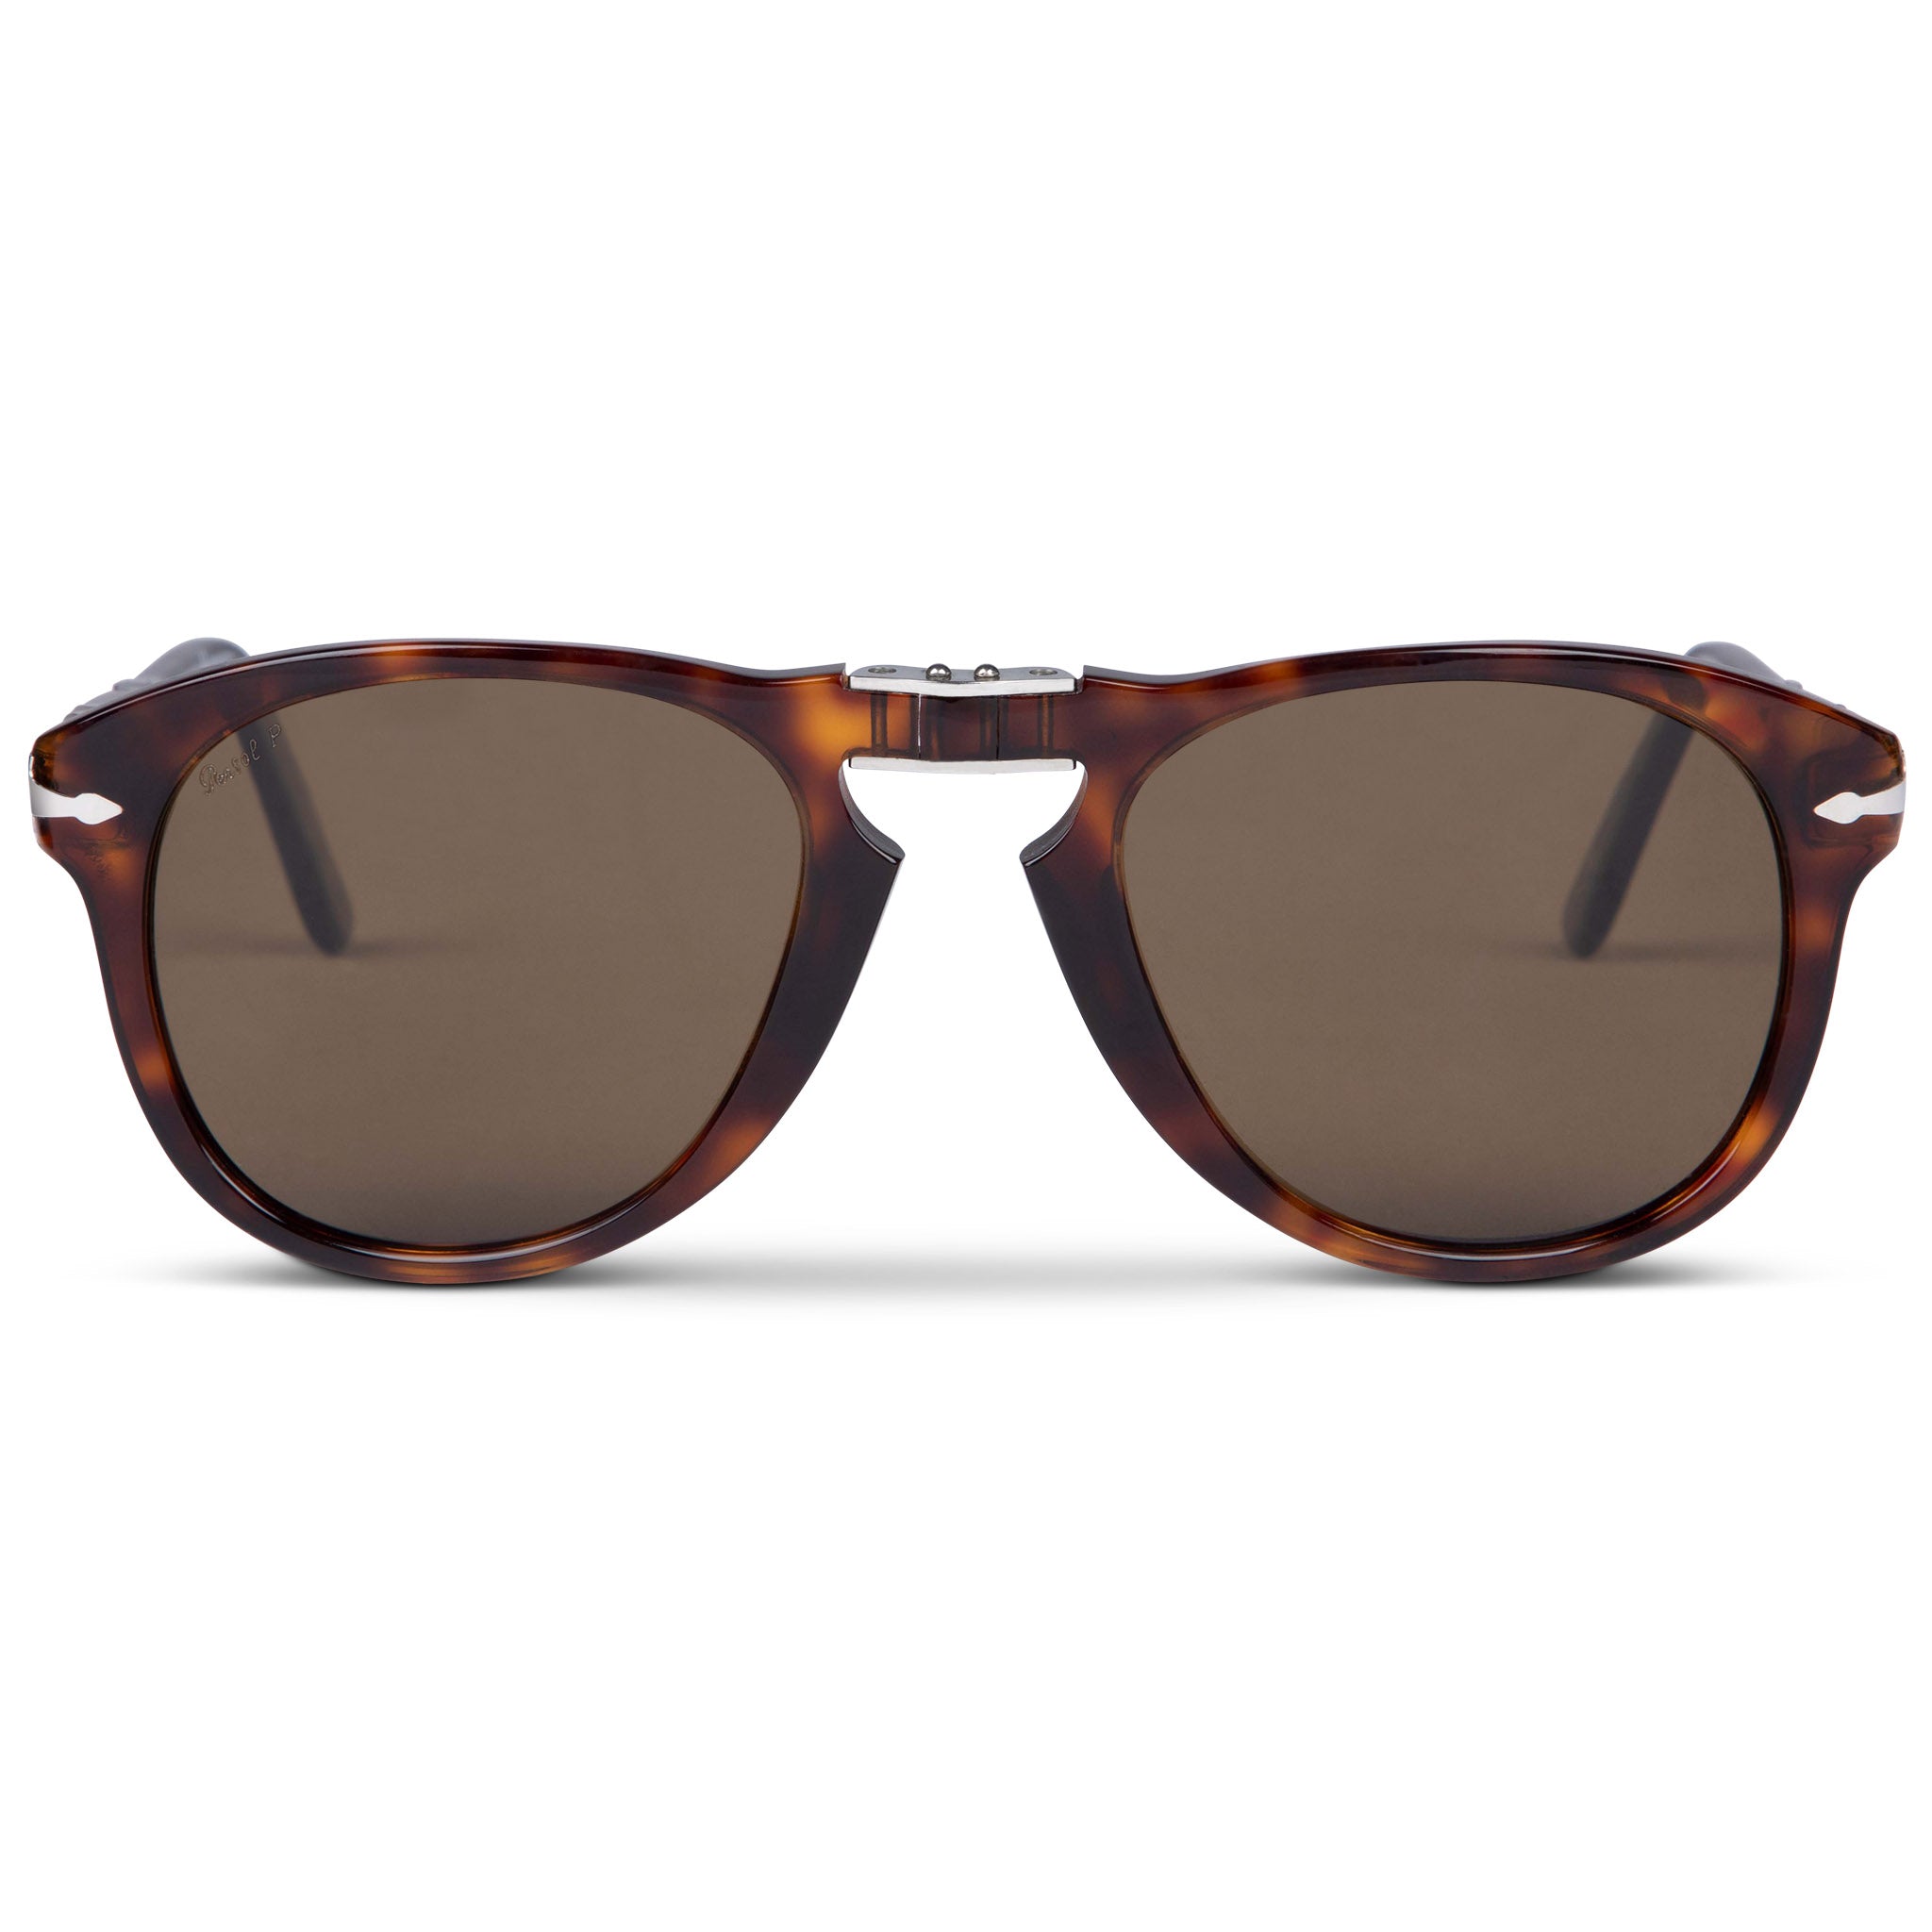 Persol 714 Folding Havana Polarized Brown Sunglasses